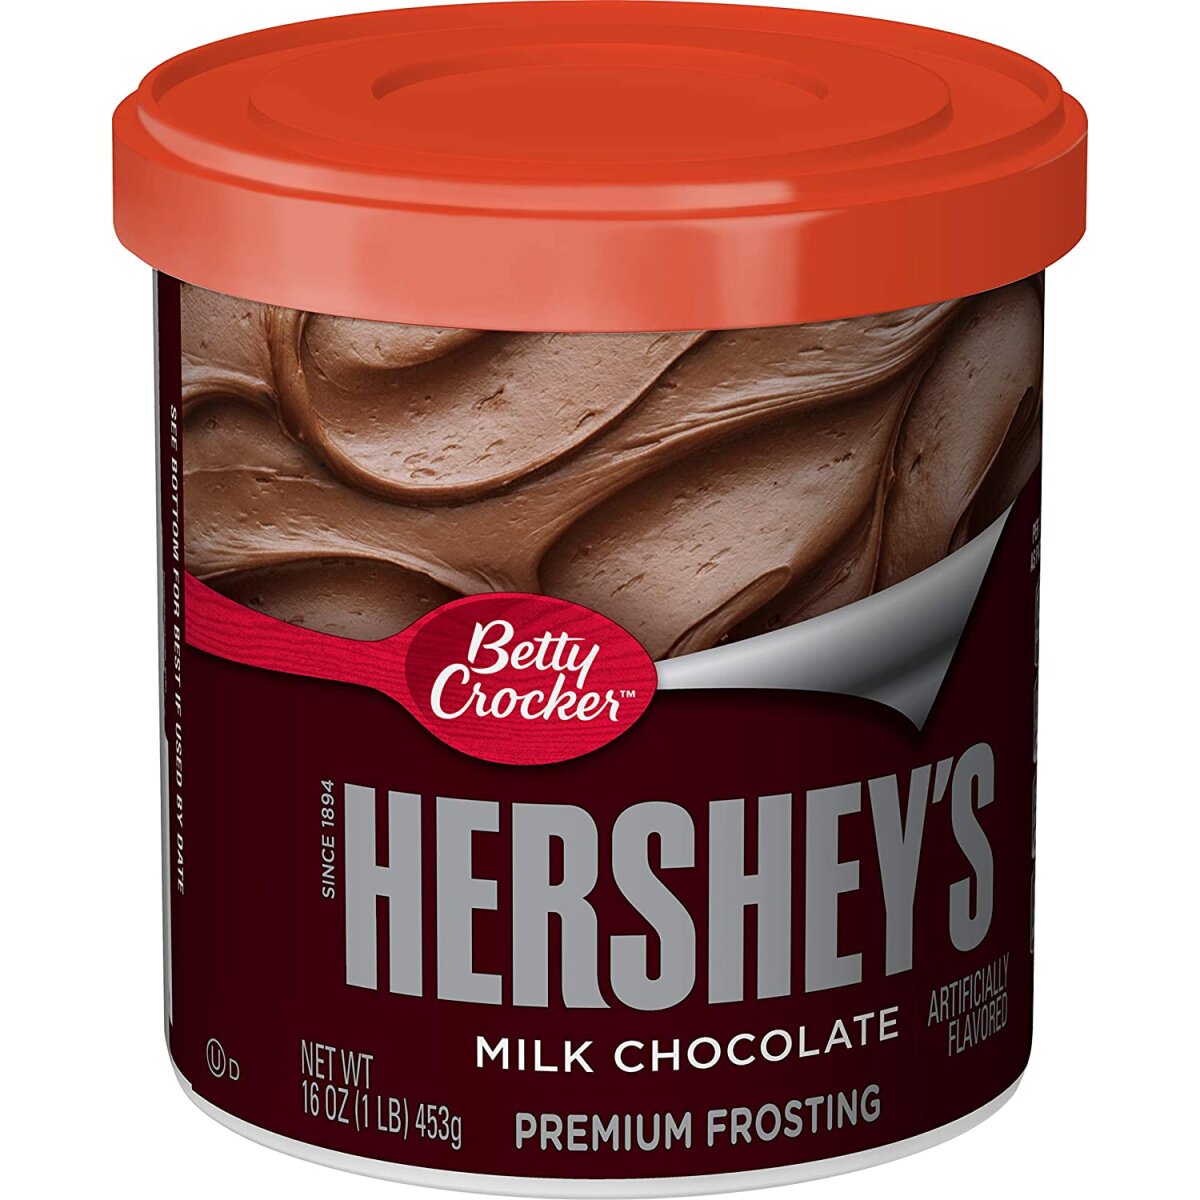 Choco паста. Шоколадная паста милкс. Hershey's паста шоколадная. Шоколадная паста Choco Milk. Шоколадная паста ХЕРШИС.